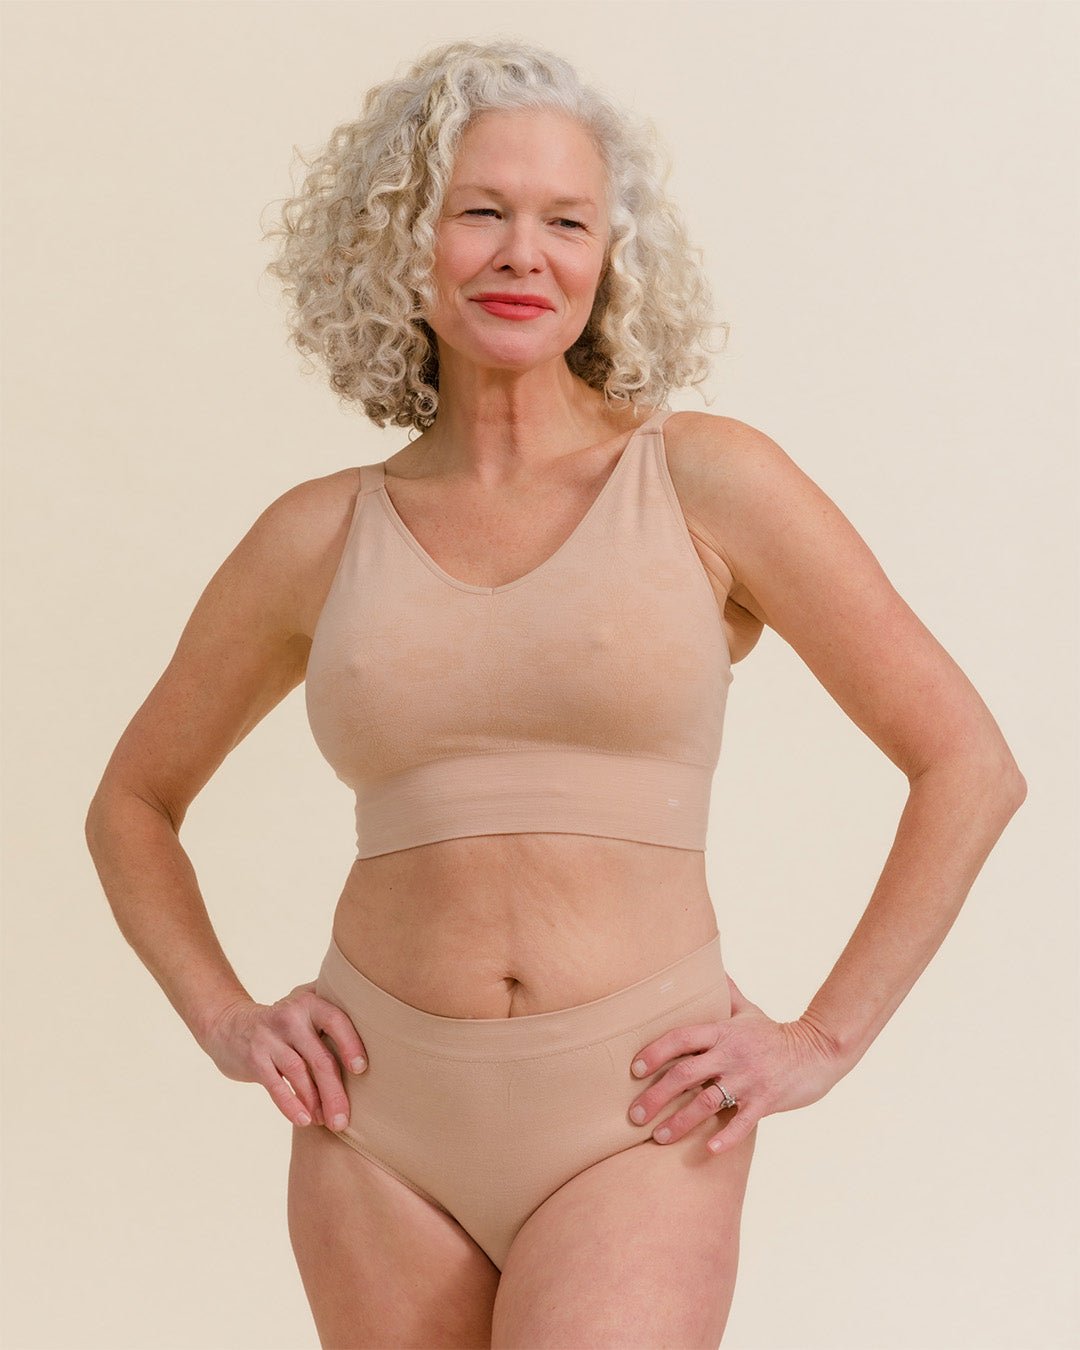 BRANWYN Performance Innerwear - Weekend essentials 👉🏻 bras that don't  feel boob jail. #iambranwyn